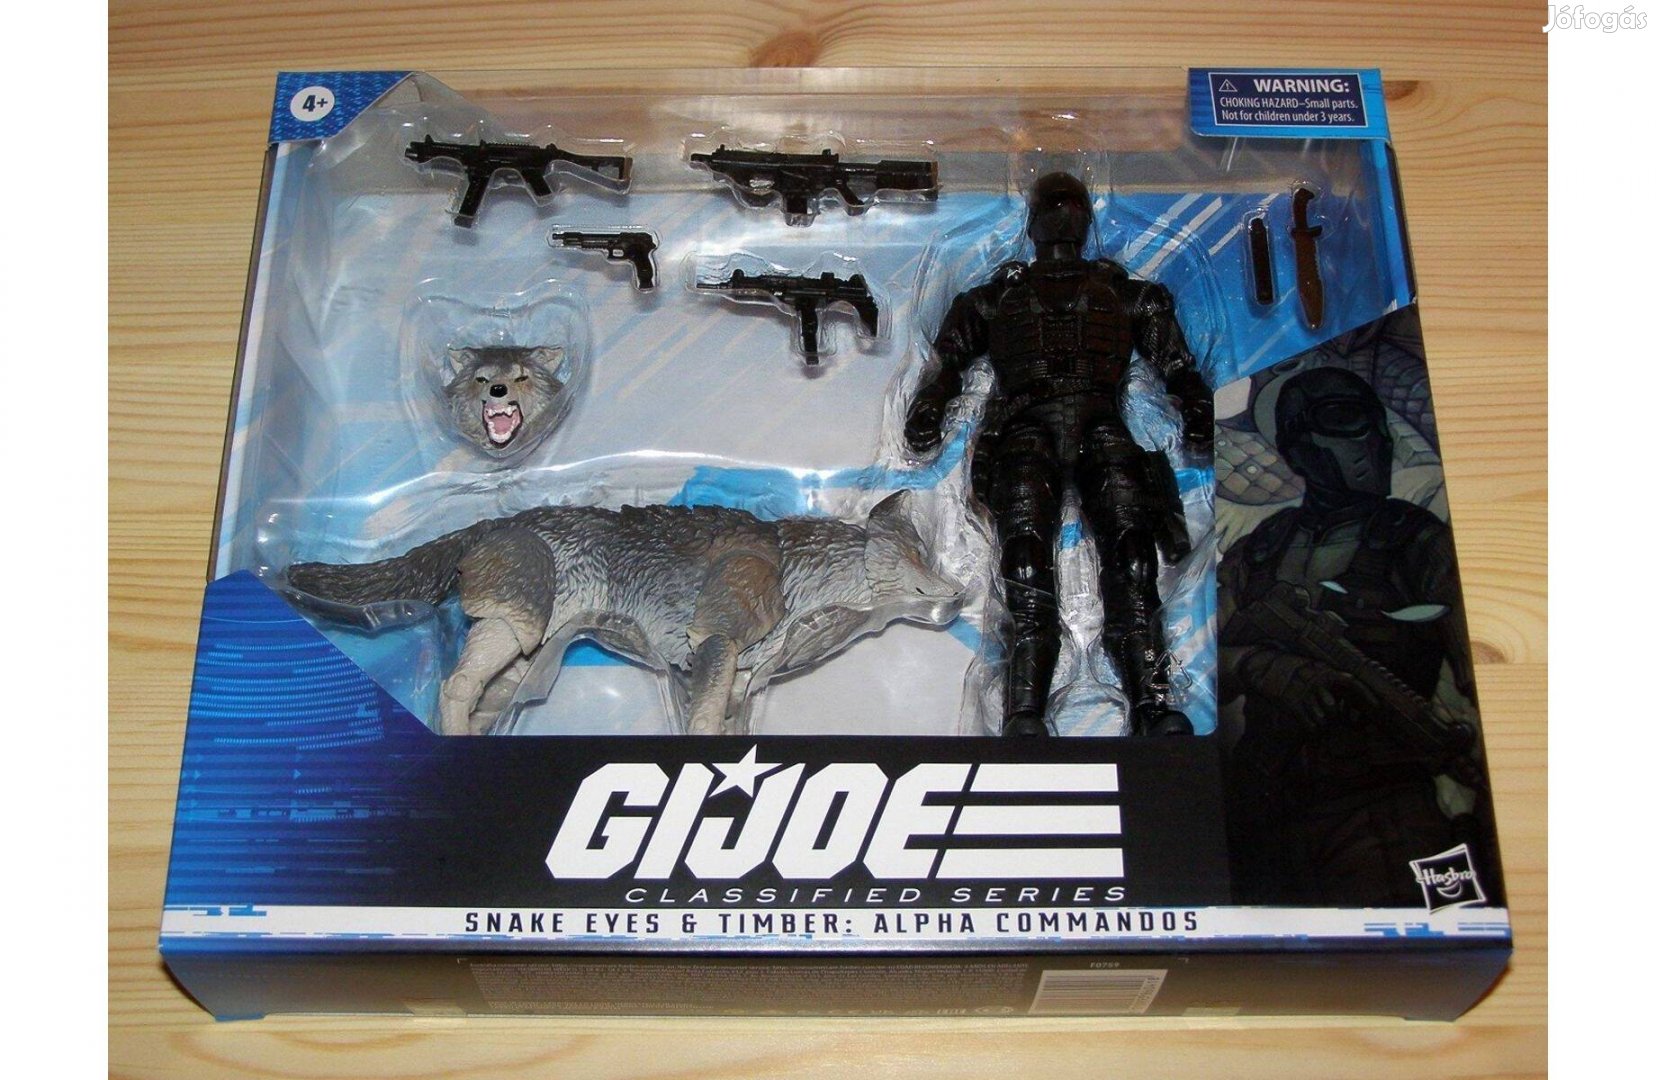 GI Joe Classified 15 cm (6 inch) Snake Eyes & Timber Wolf figura